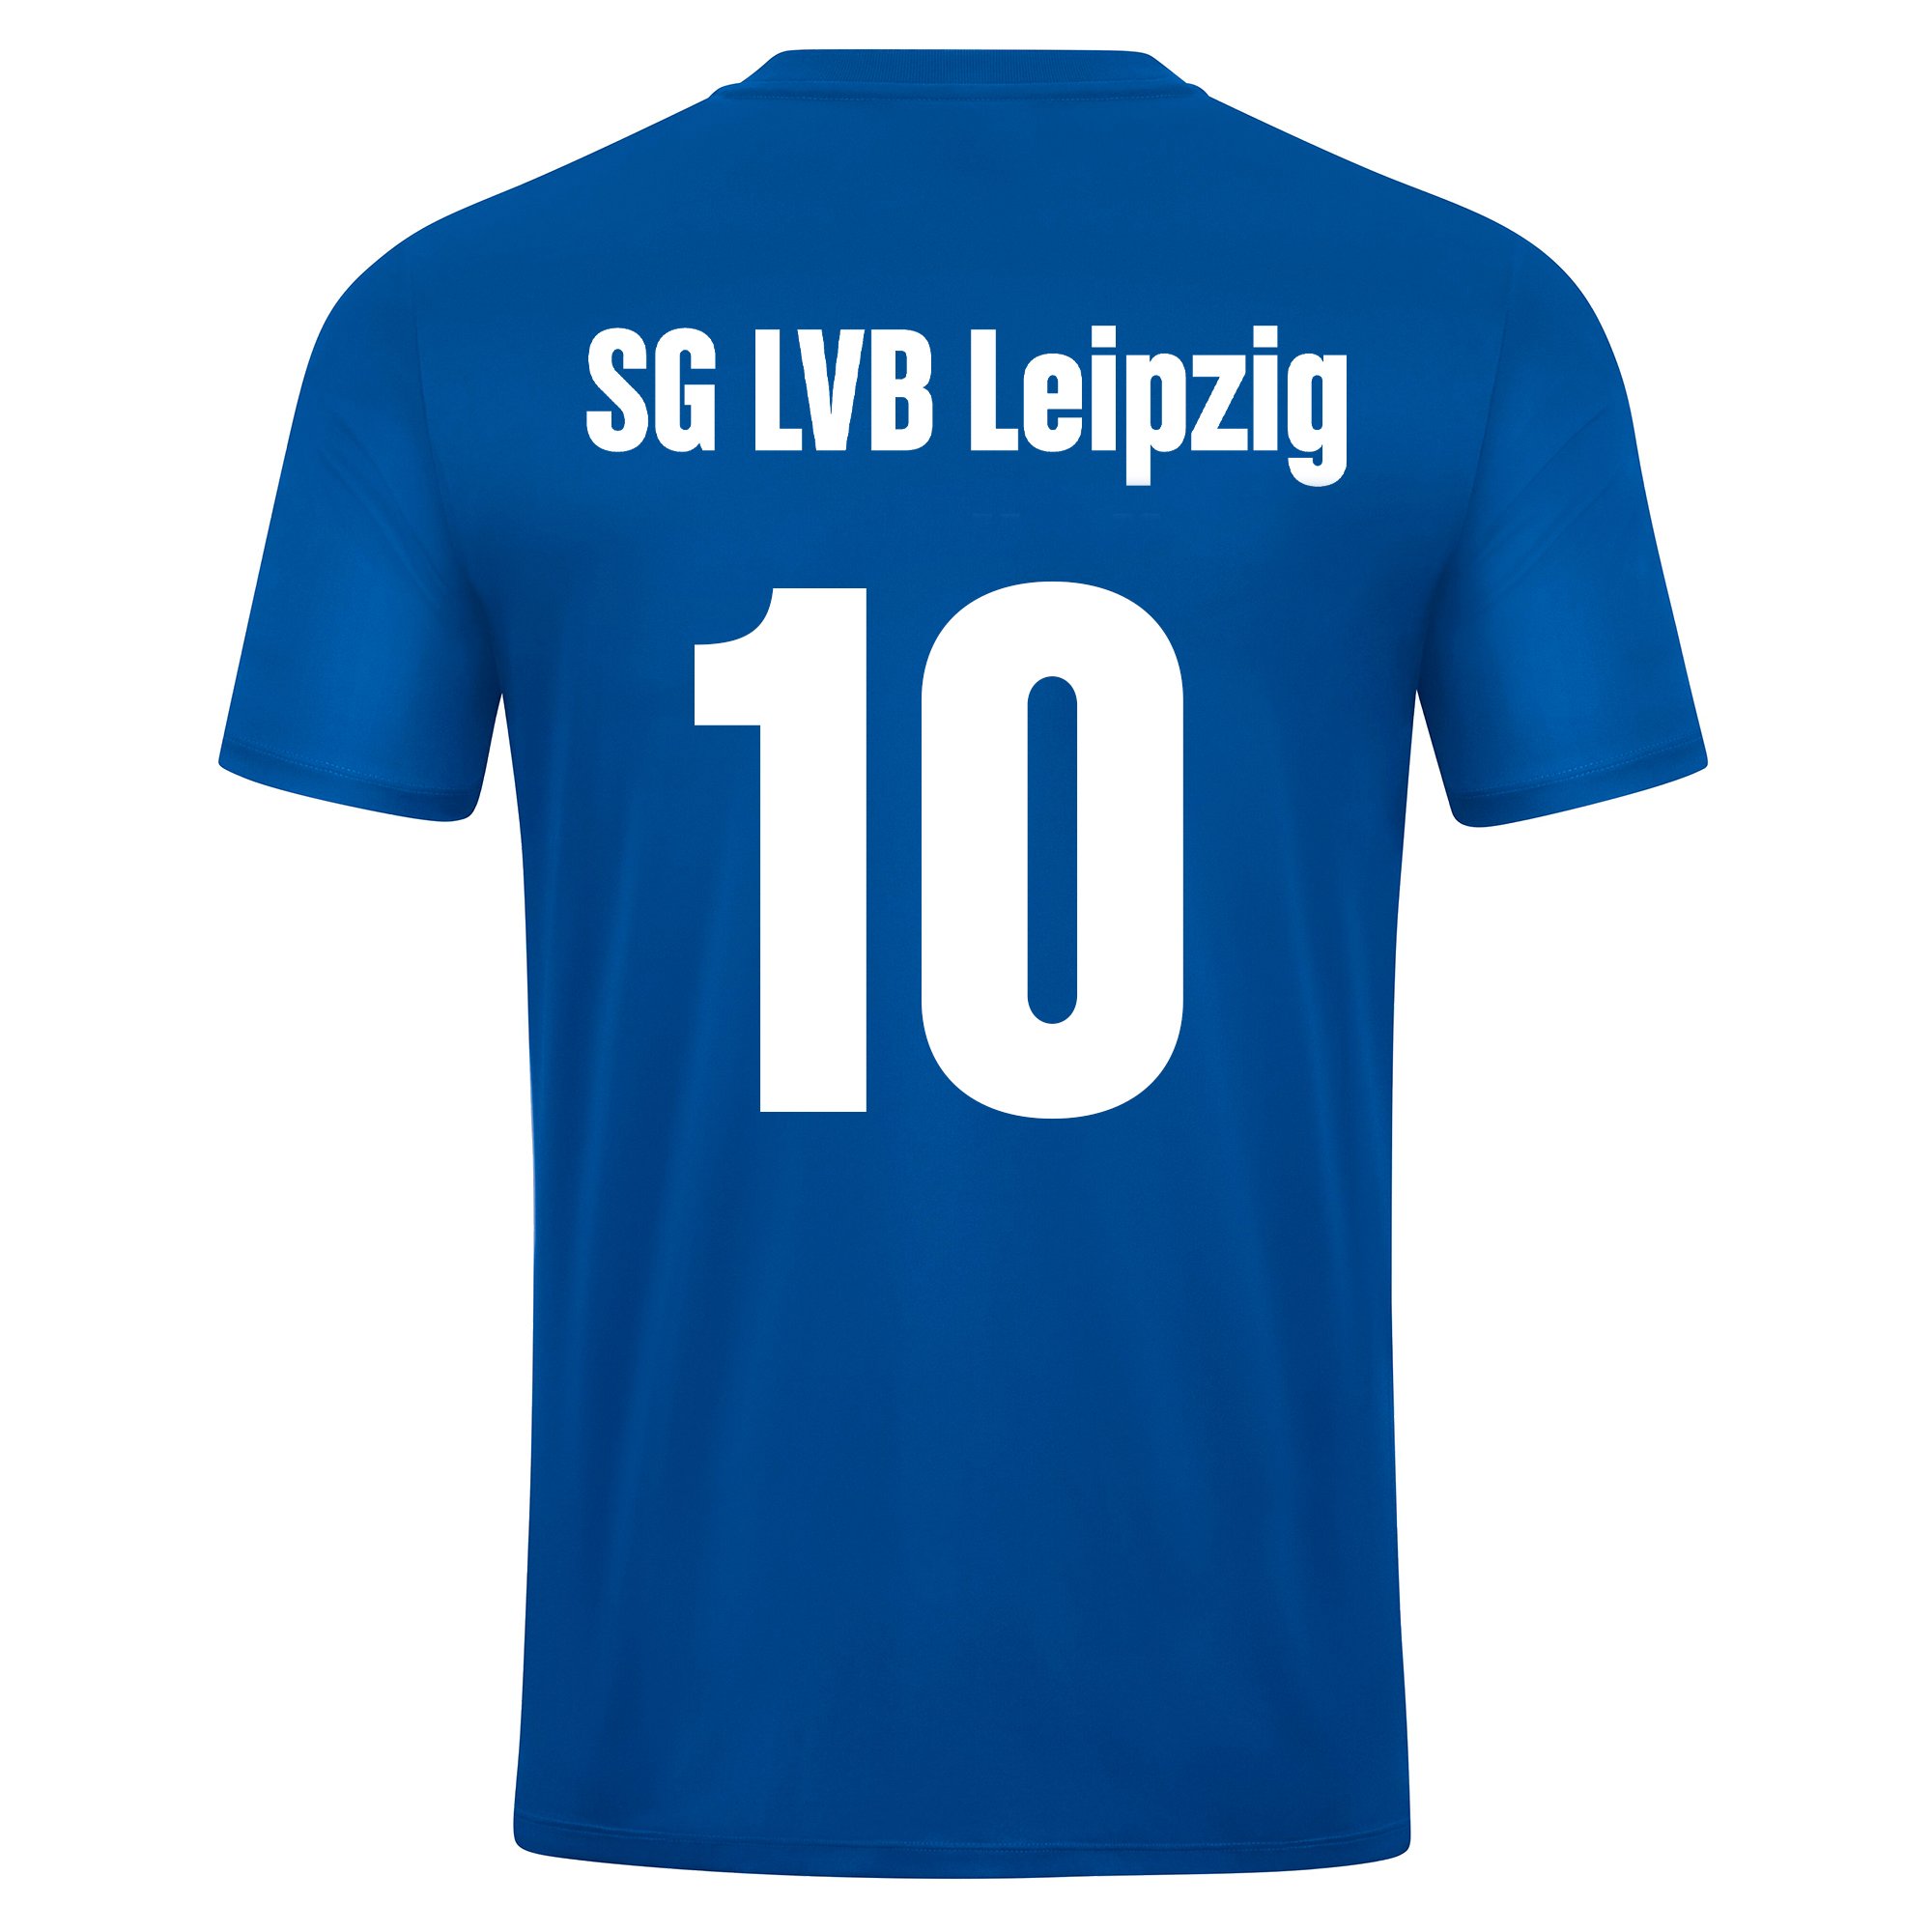 SG LVB Leipzig Trikot